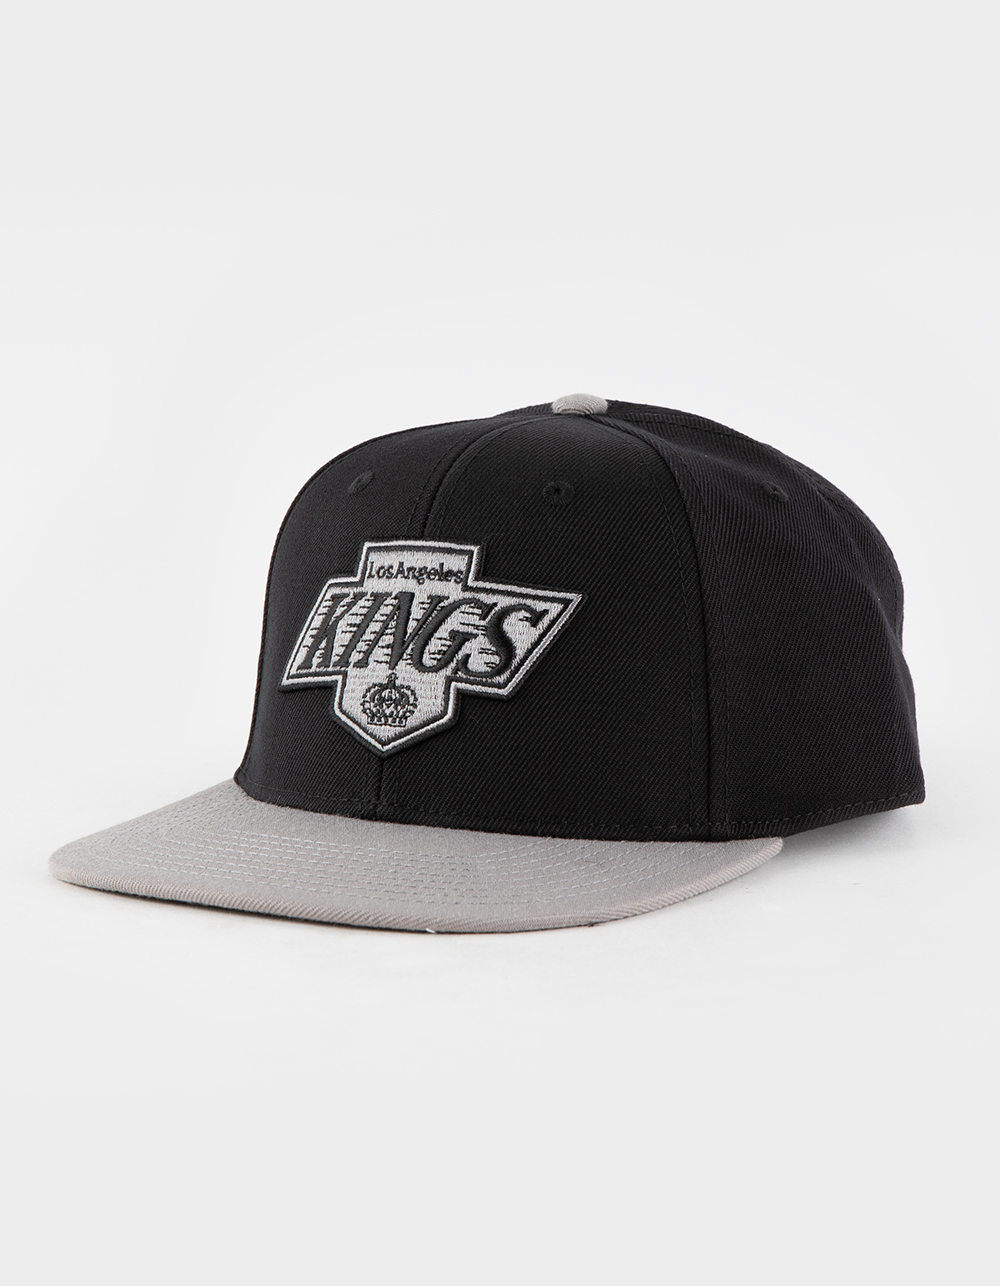 American Needle 400 Series La Kings Snapback Hat - Black - One Size